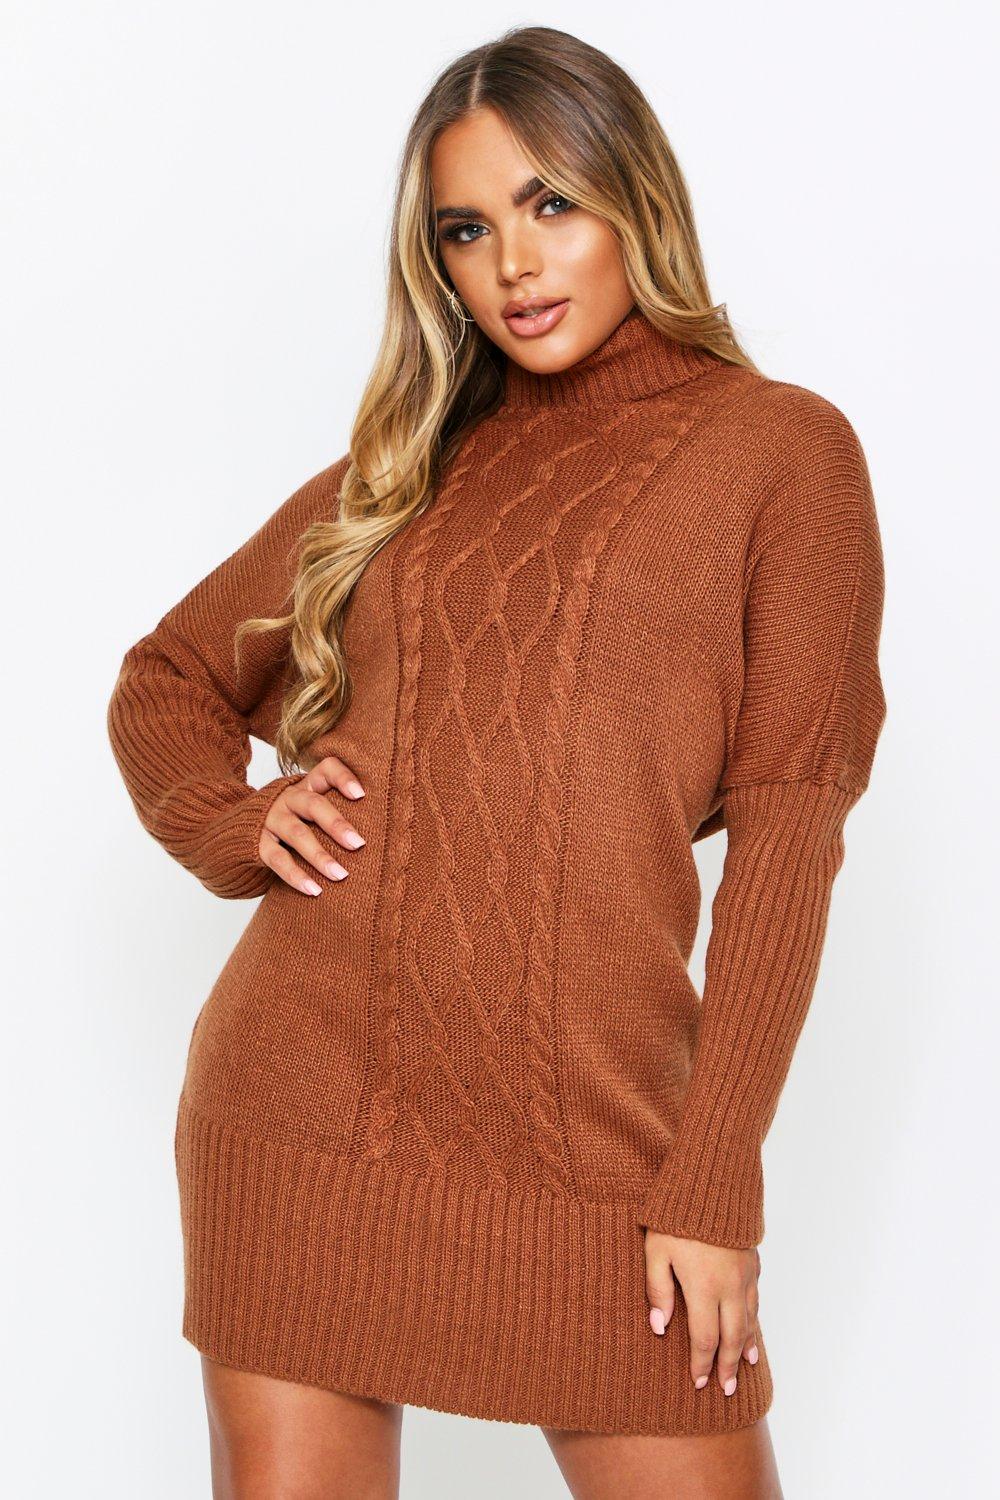 Brandy melville sweater dress